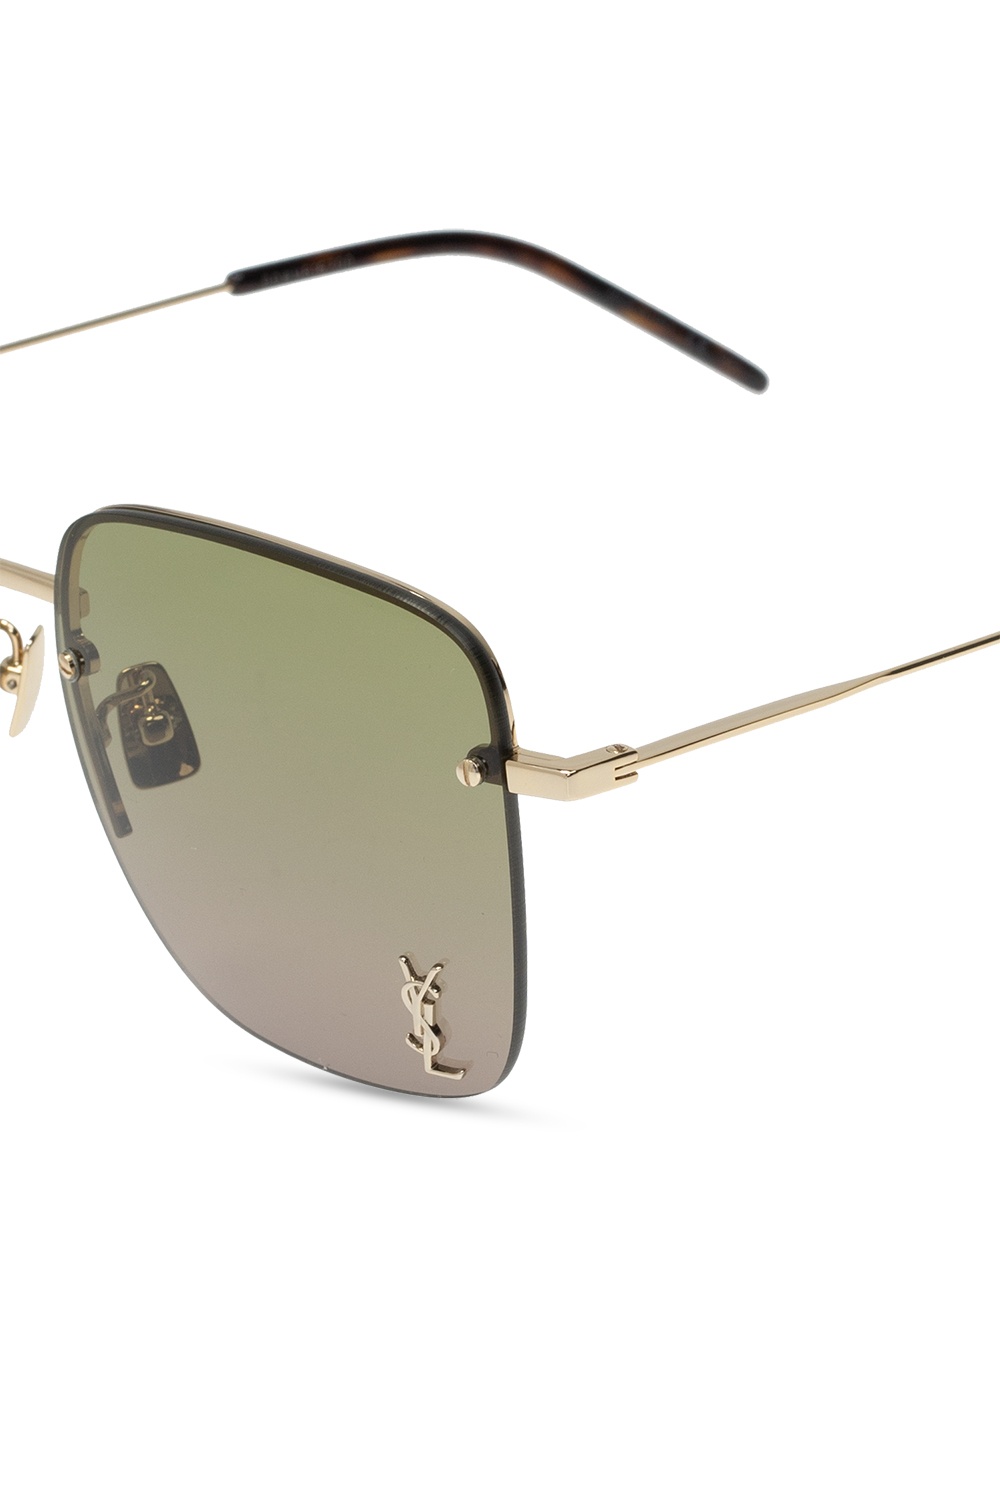 Saint Laurent SL 312 M 008 Sunglasses Gold